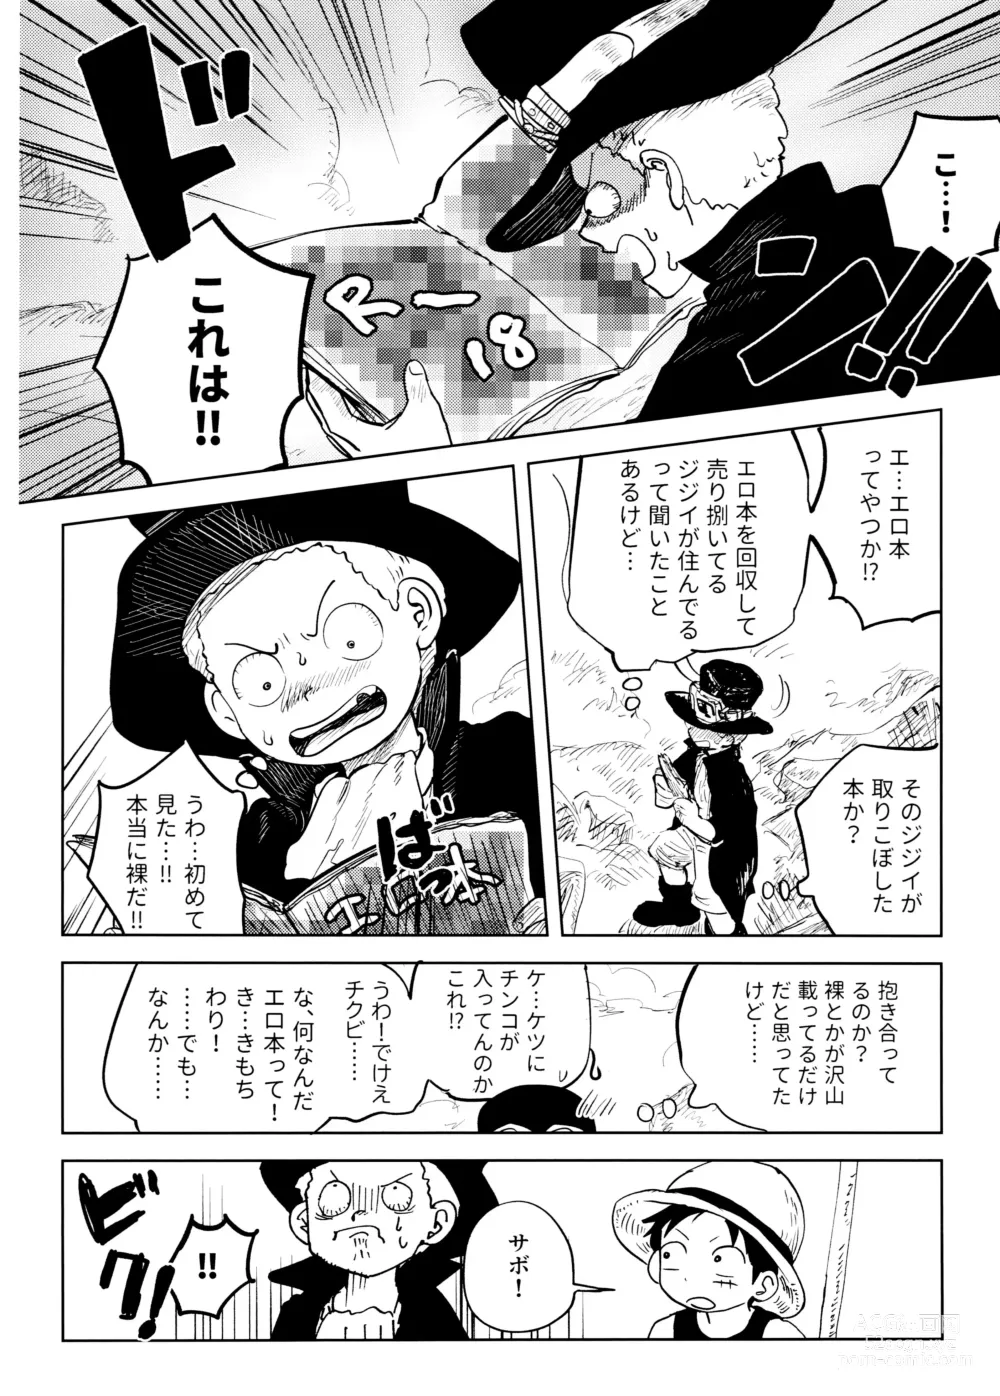 Page 5 of doujinshi Himitsu no Colubo Yama